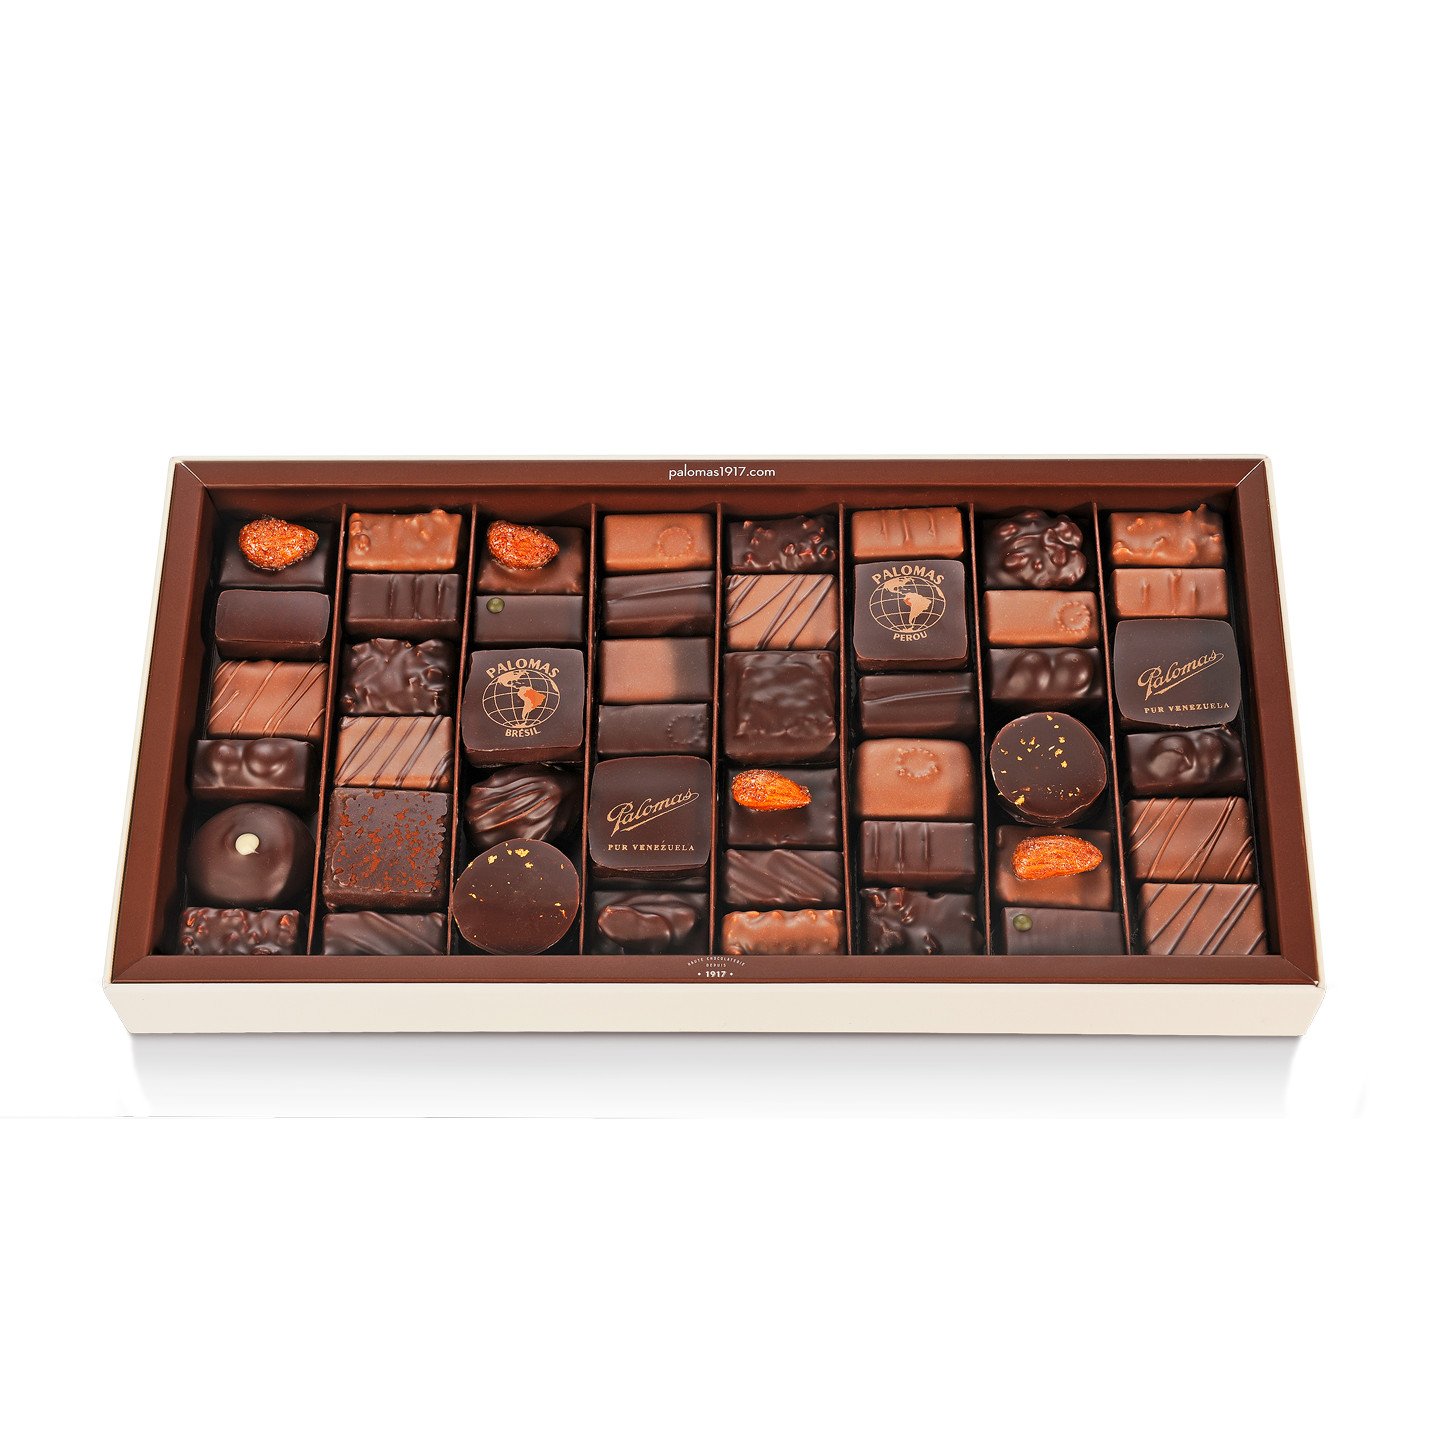 Palomas - Coffret de Chocolats